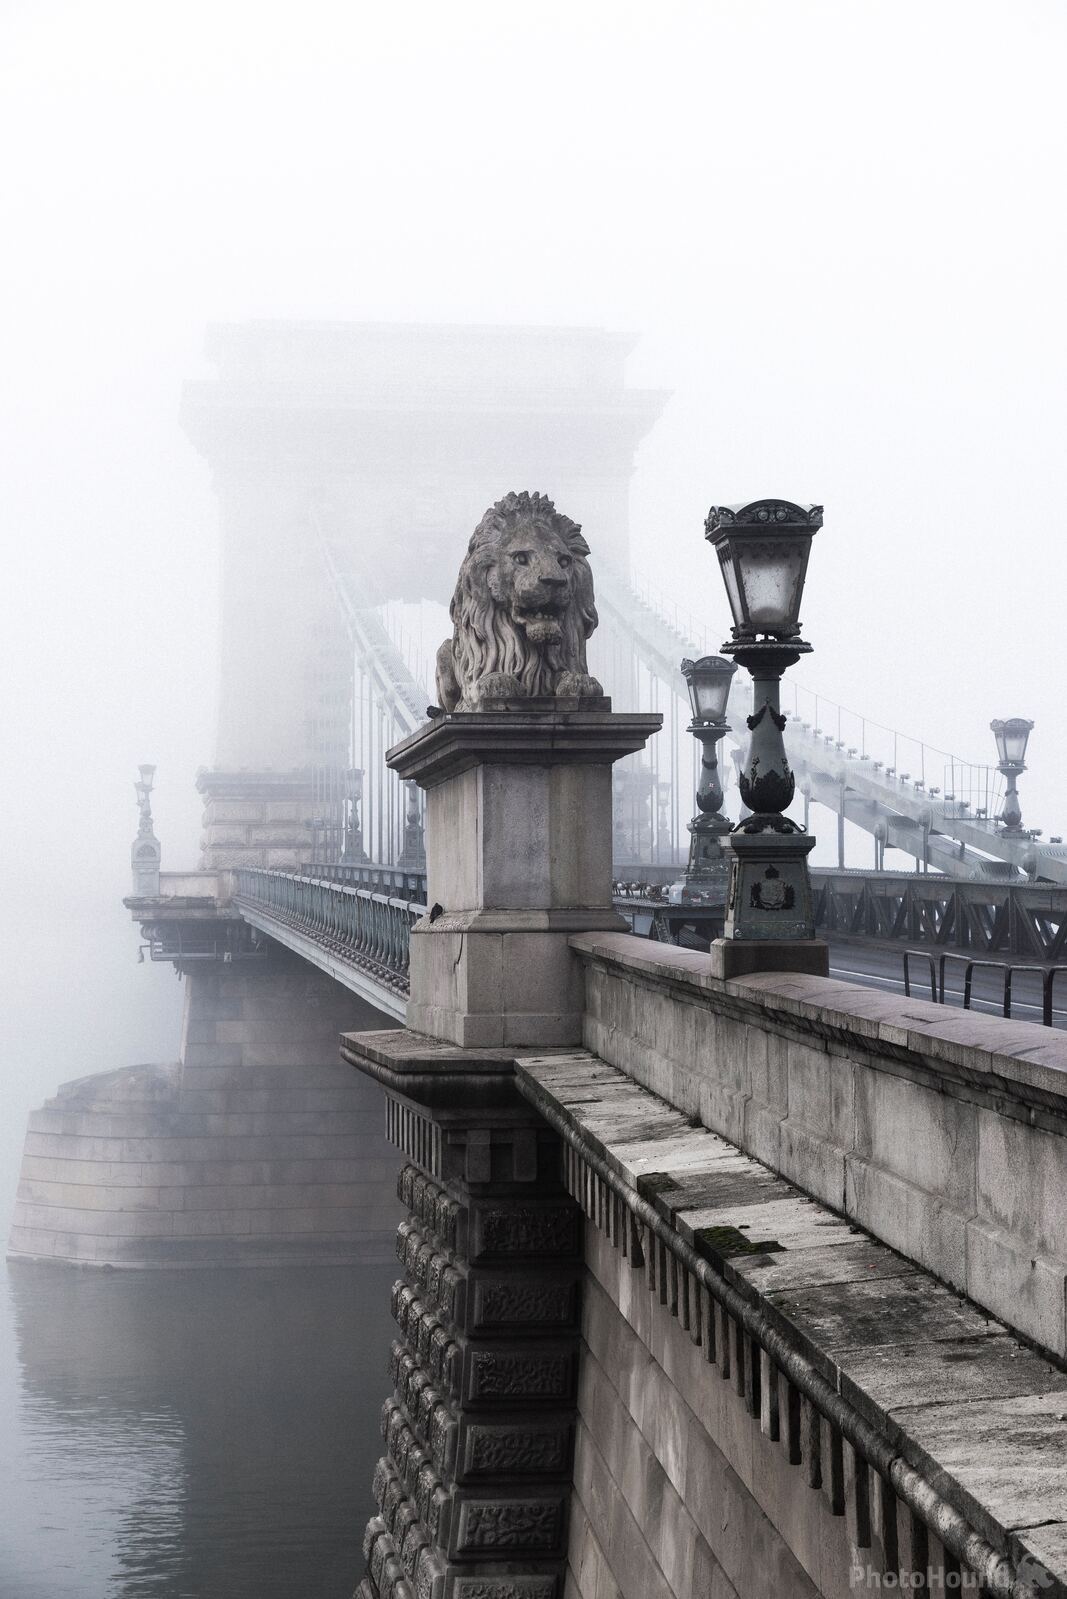 Image of Széchenyi Chain Bridge by Team PhotoHound